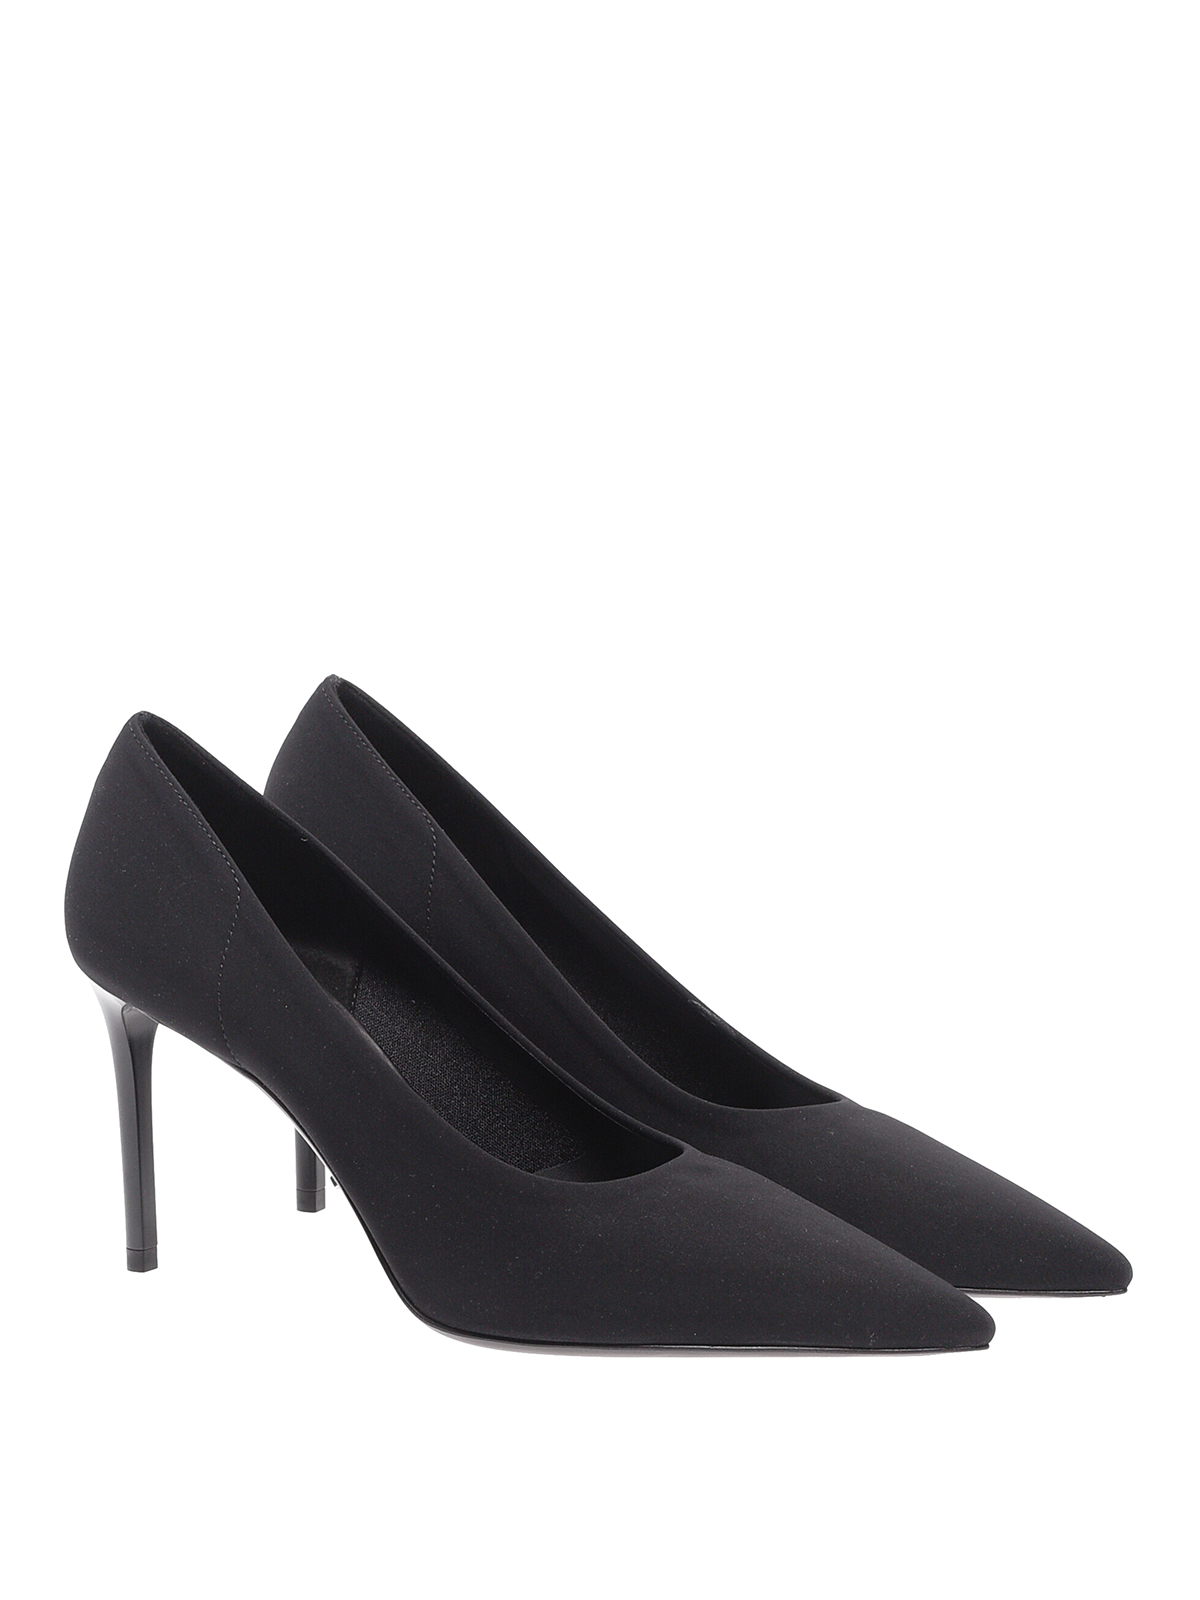 Court shoes Prada - Tech fabric black pumps - 1I228L3KQ6F0002 